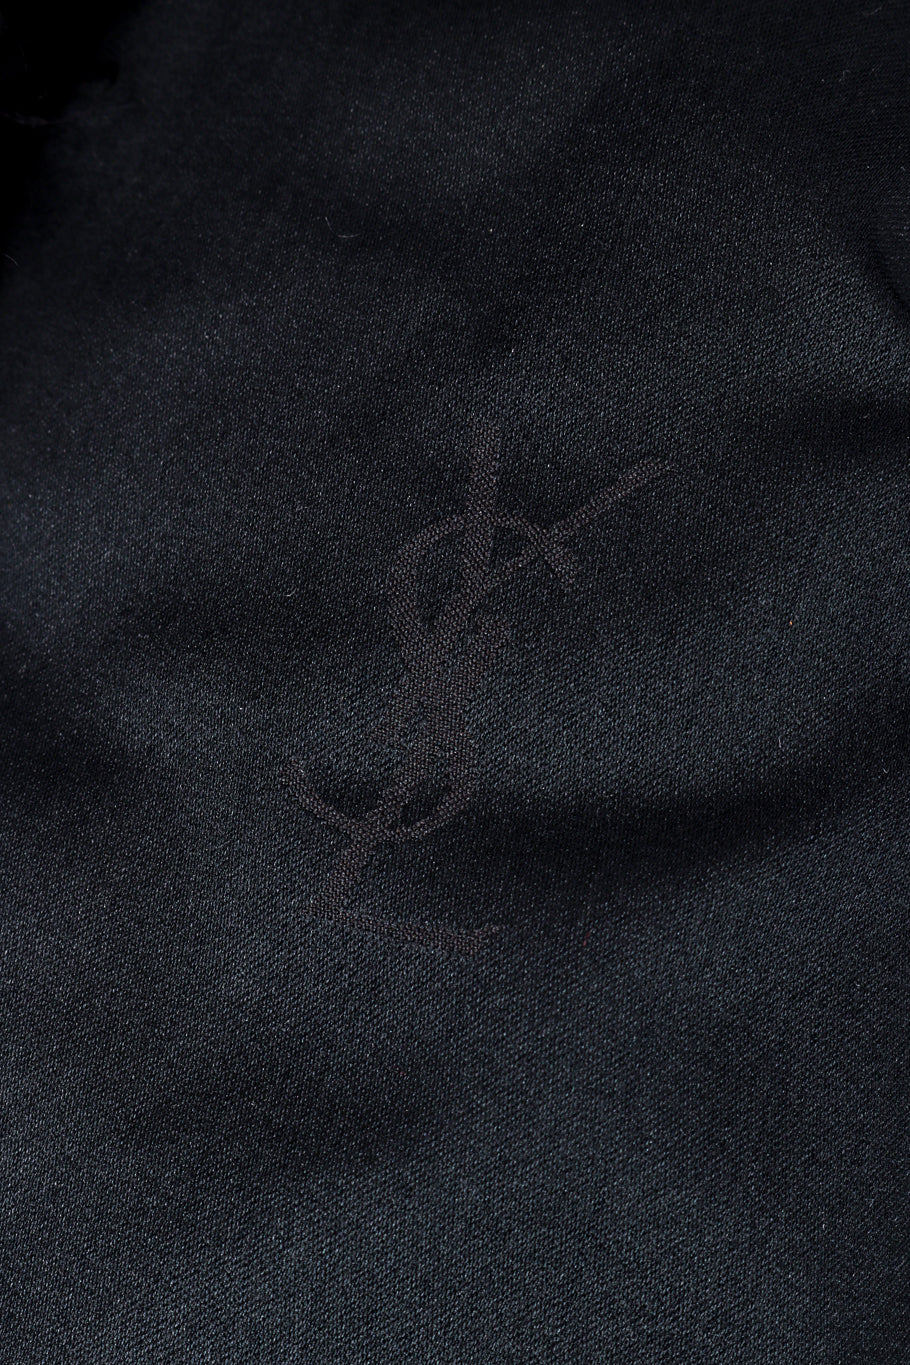 Yves Saint Laurent Mongolian Fur Jacket lining closeup @recessla